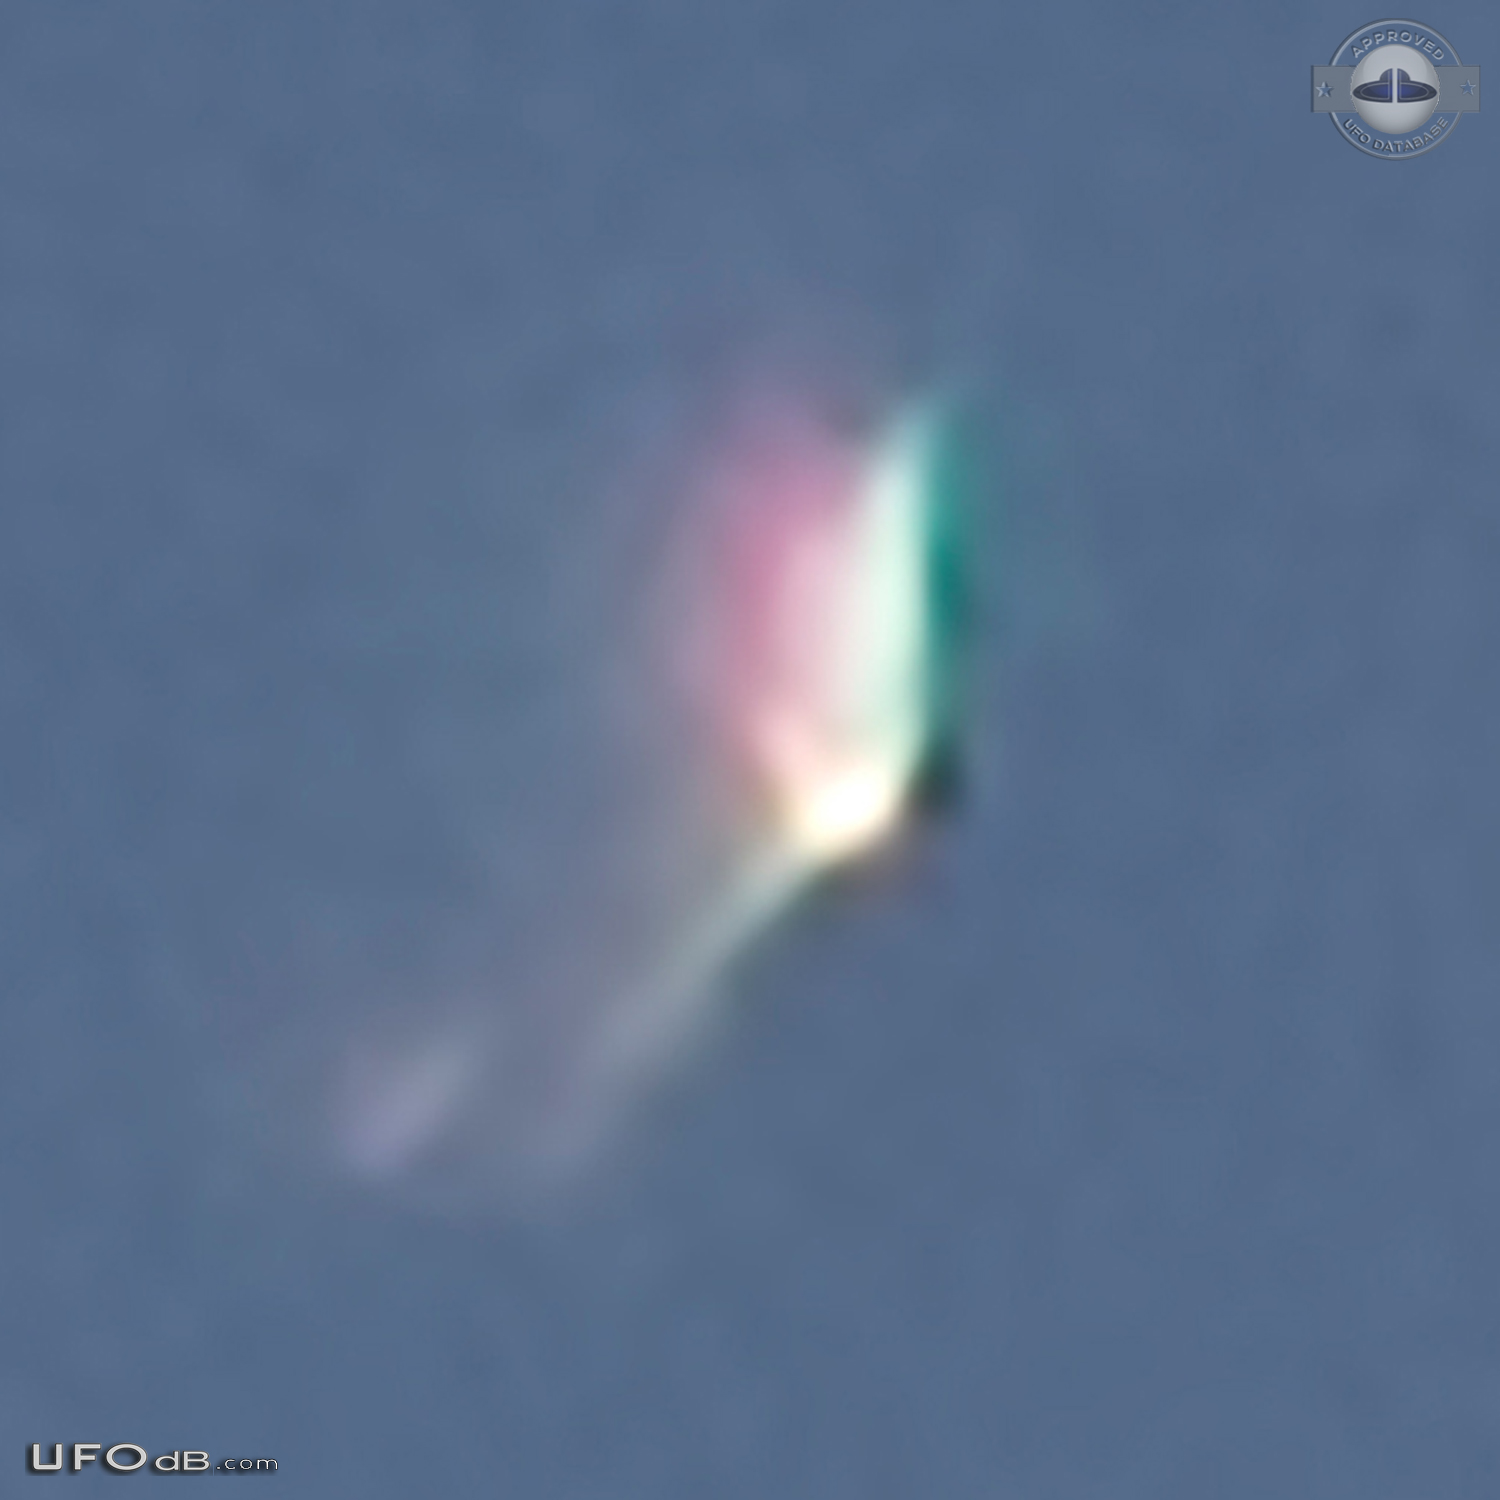 Sequantials Photos of strange UFO over Avaré São Paulo Brazil 2015 UFO Picture #668-6